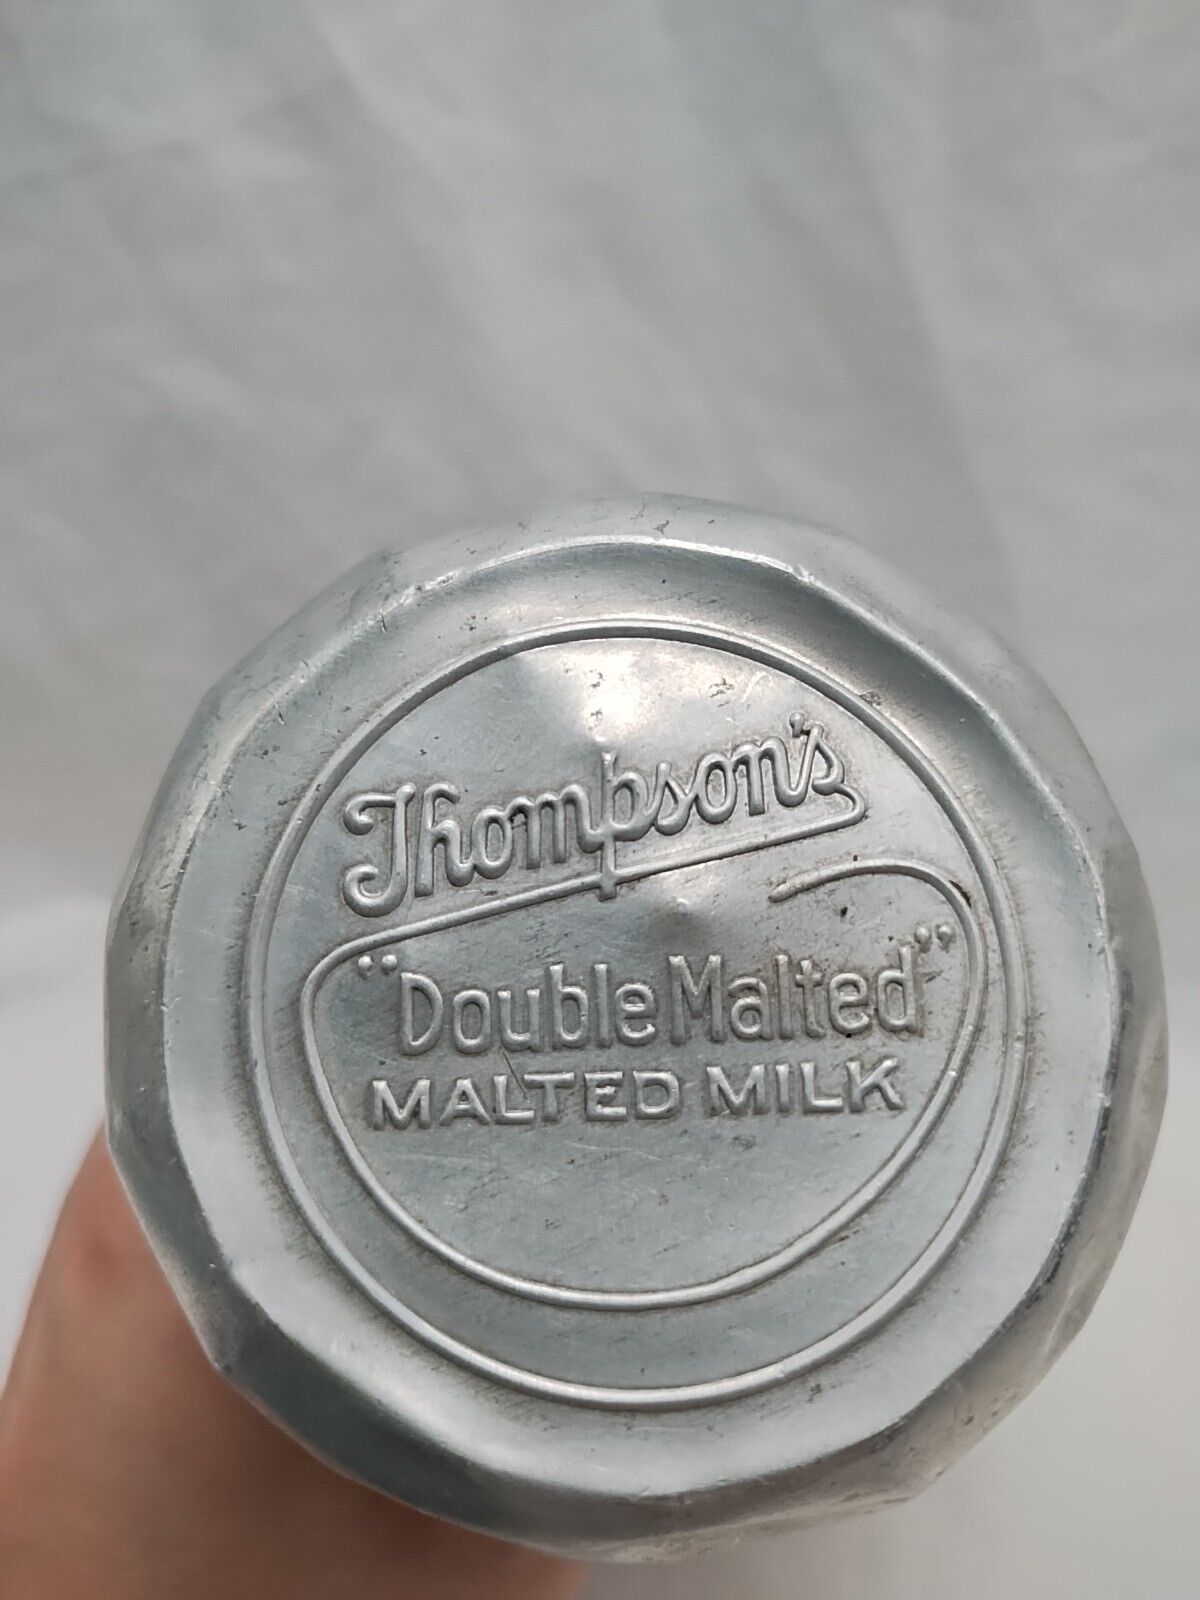 Thompsons Double Malted Malted Milk Aluminum Shaker 7\